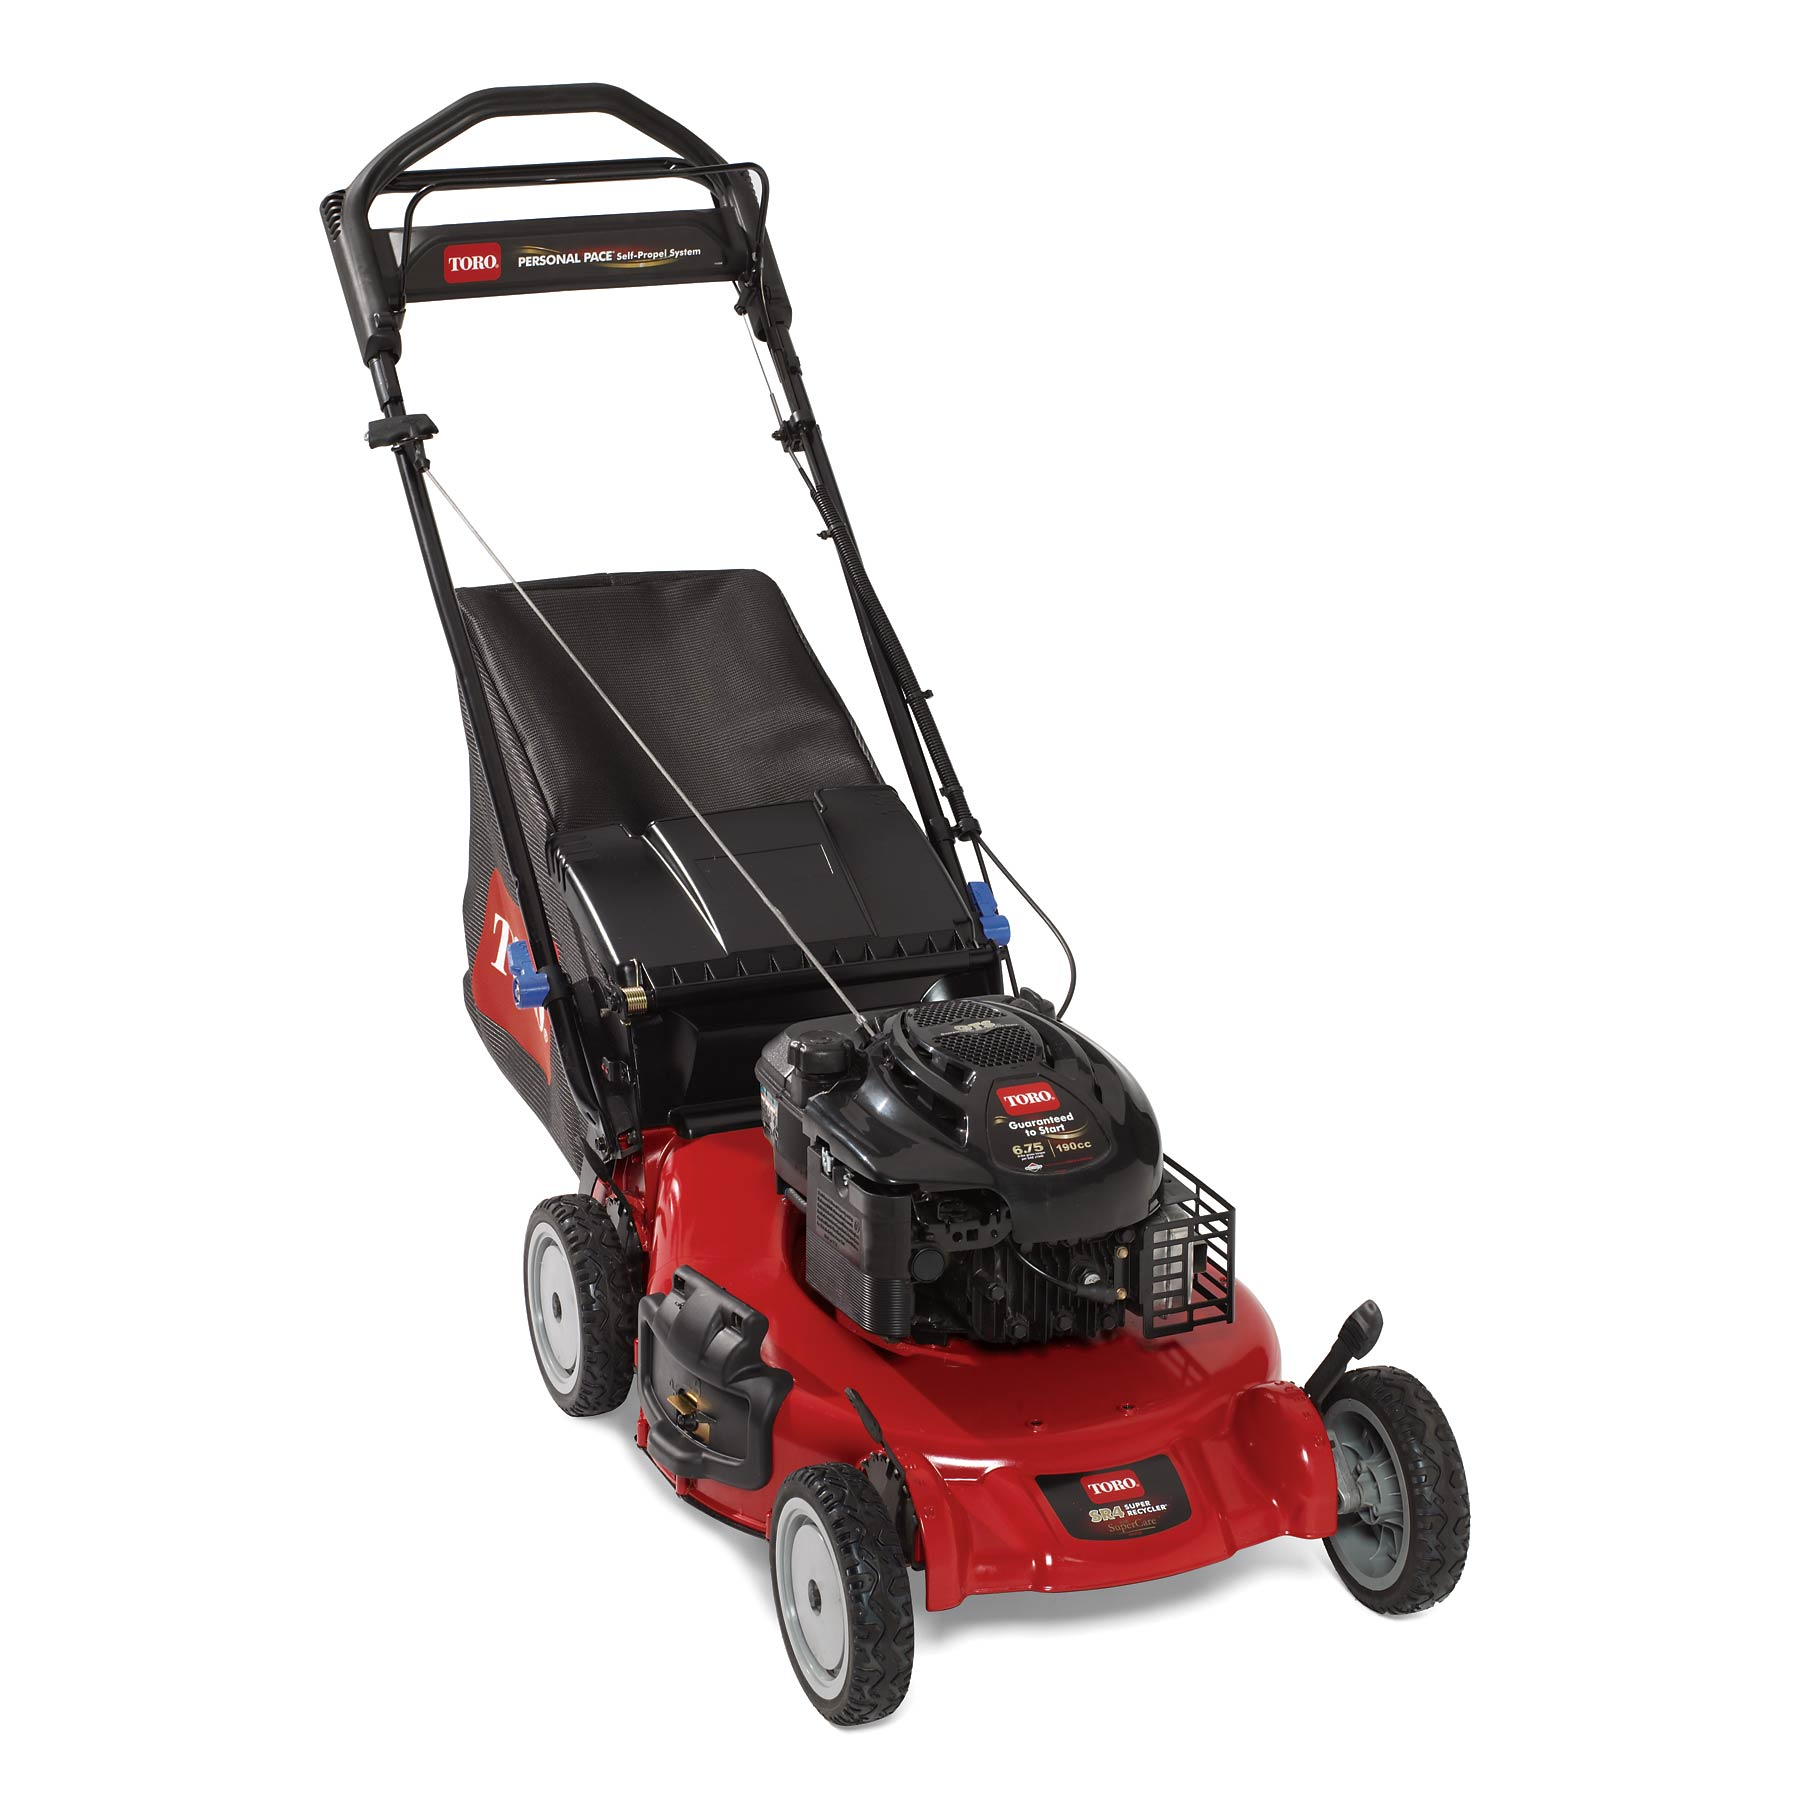 Honda, Toro lead Consumer Reports' lawn mower tests